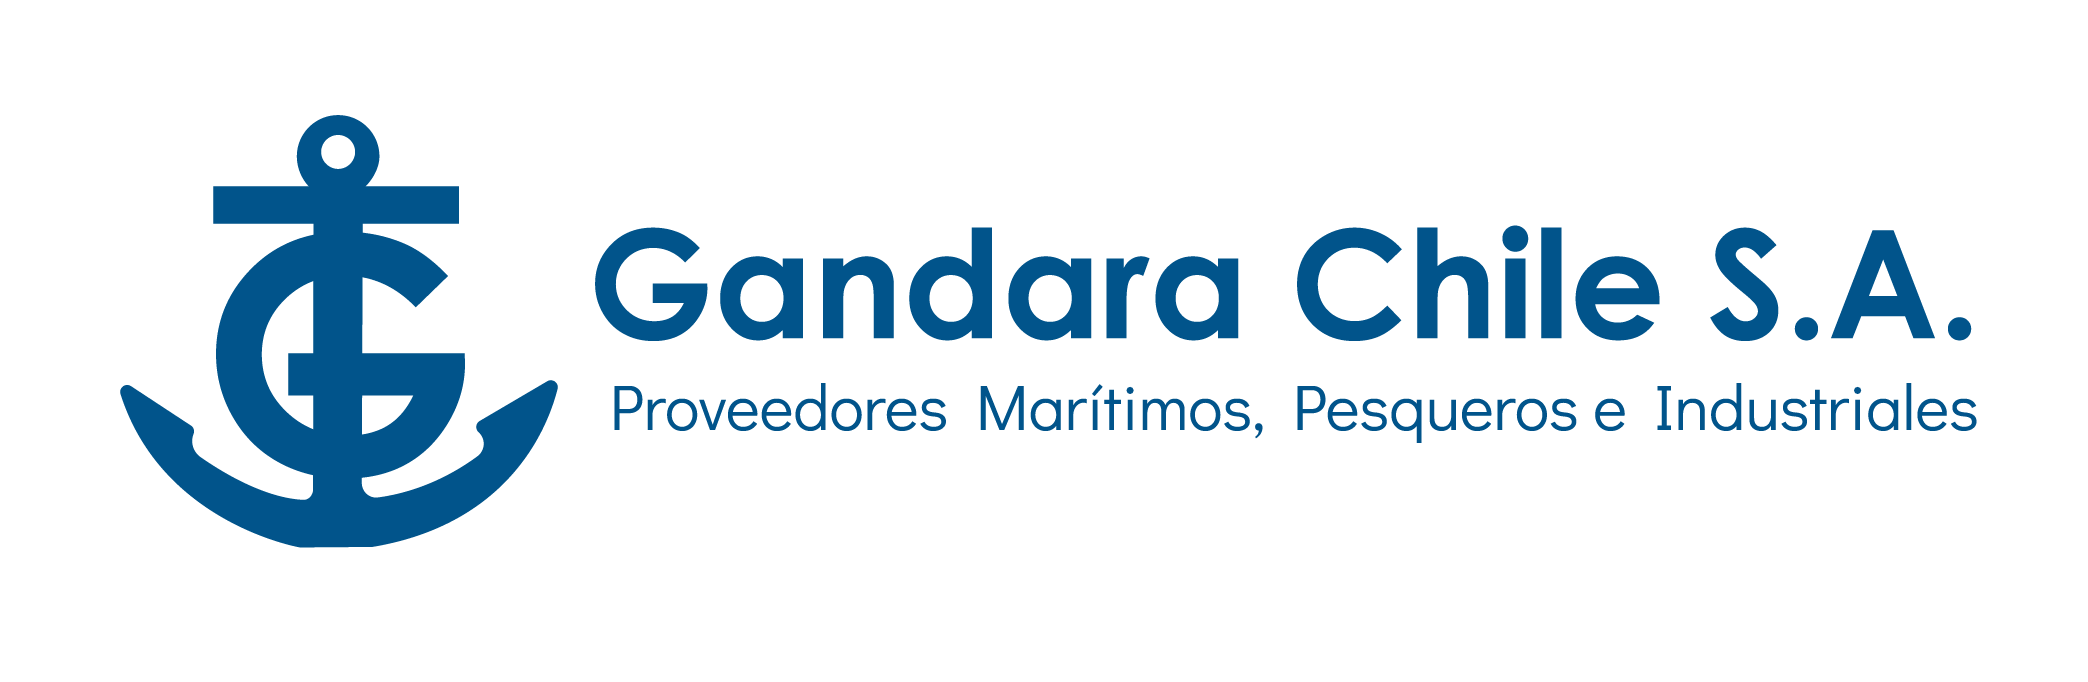 Gandara Chile S.A.